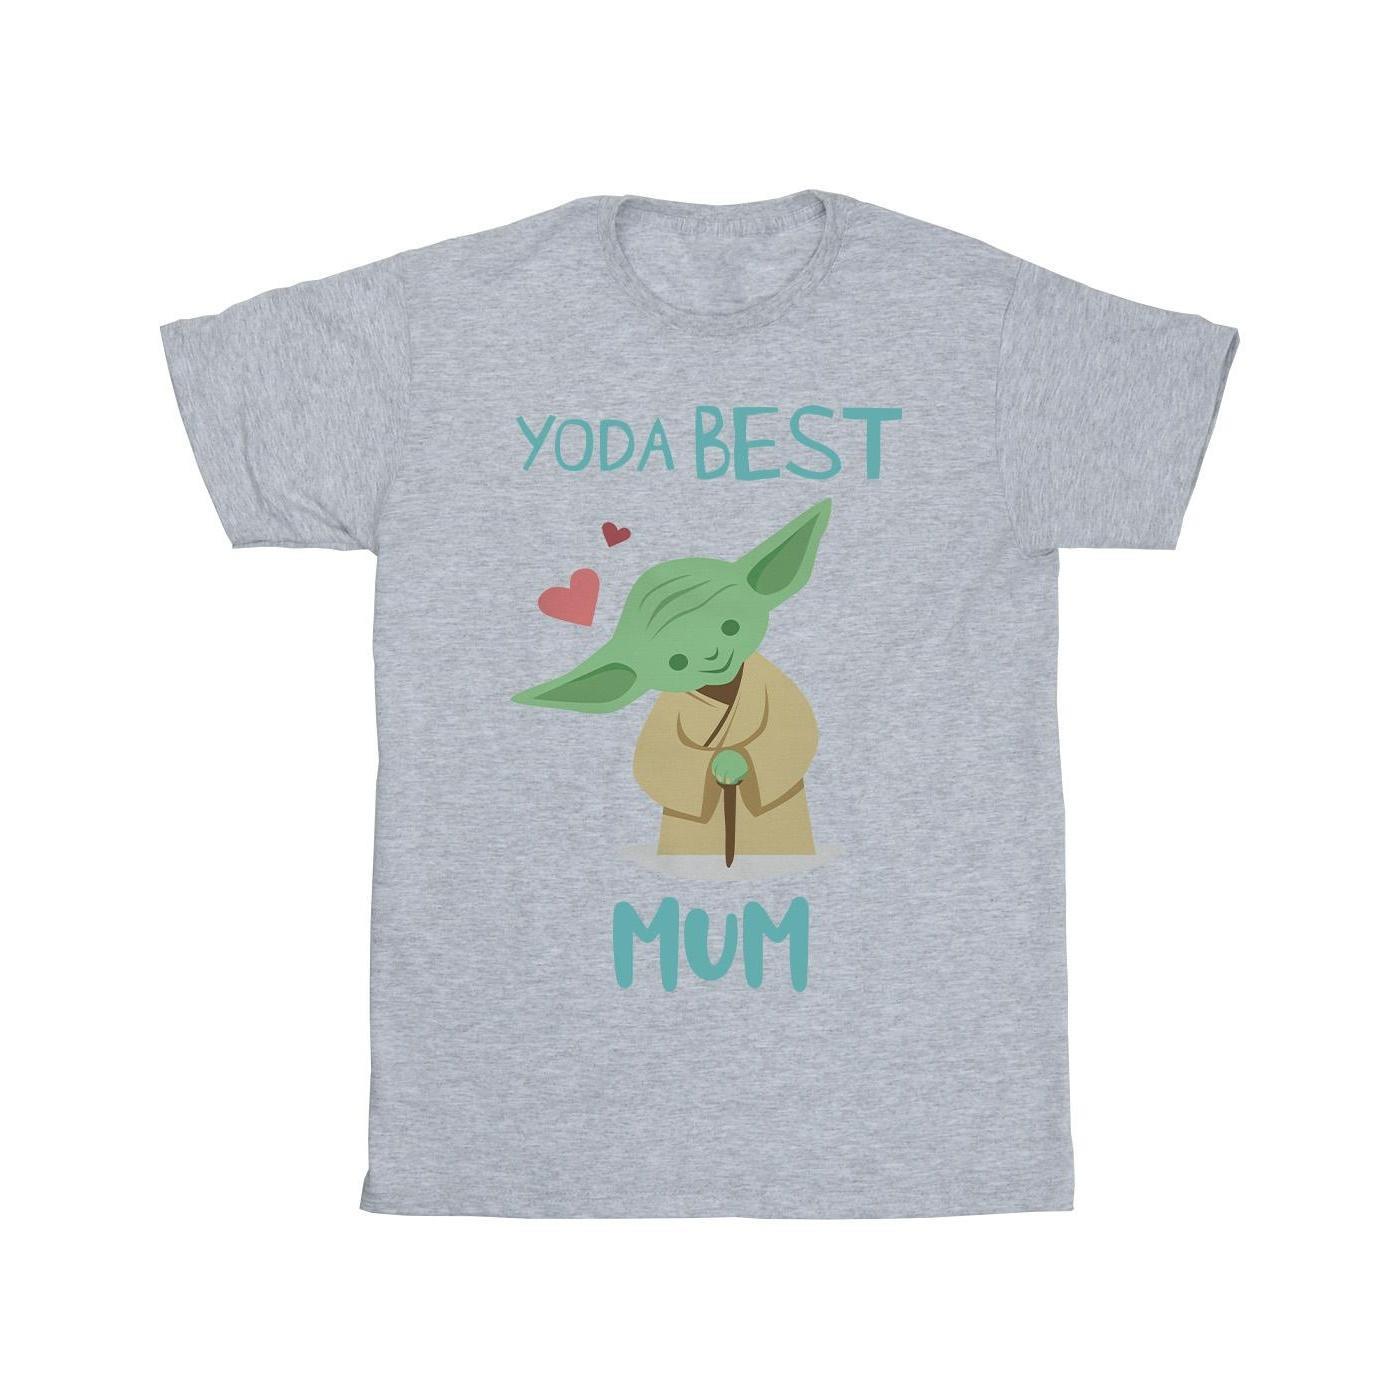 Star Wars Mens Yoda Best Mum T-Shirt (Sports Grey) (M)